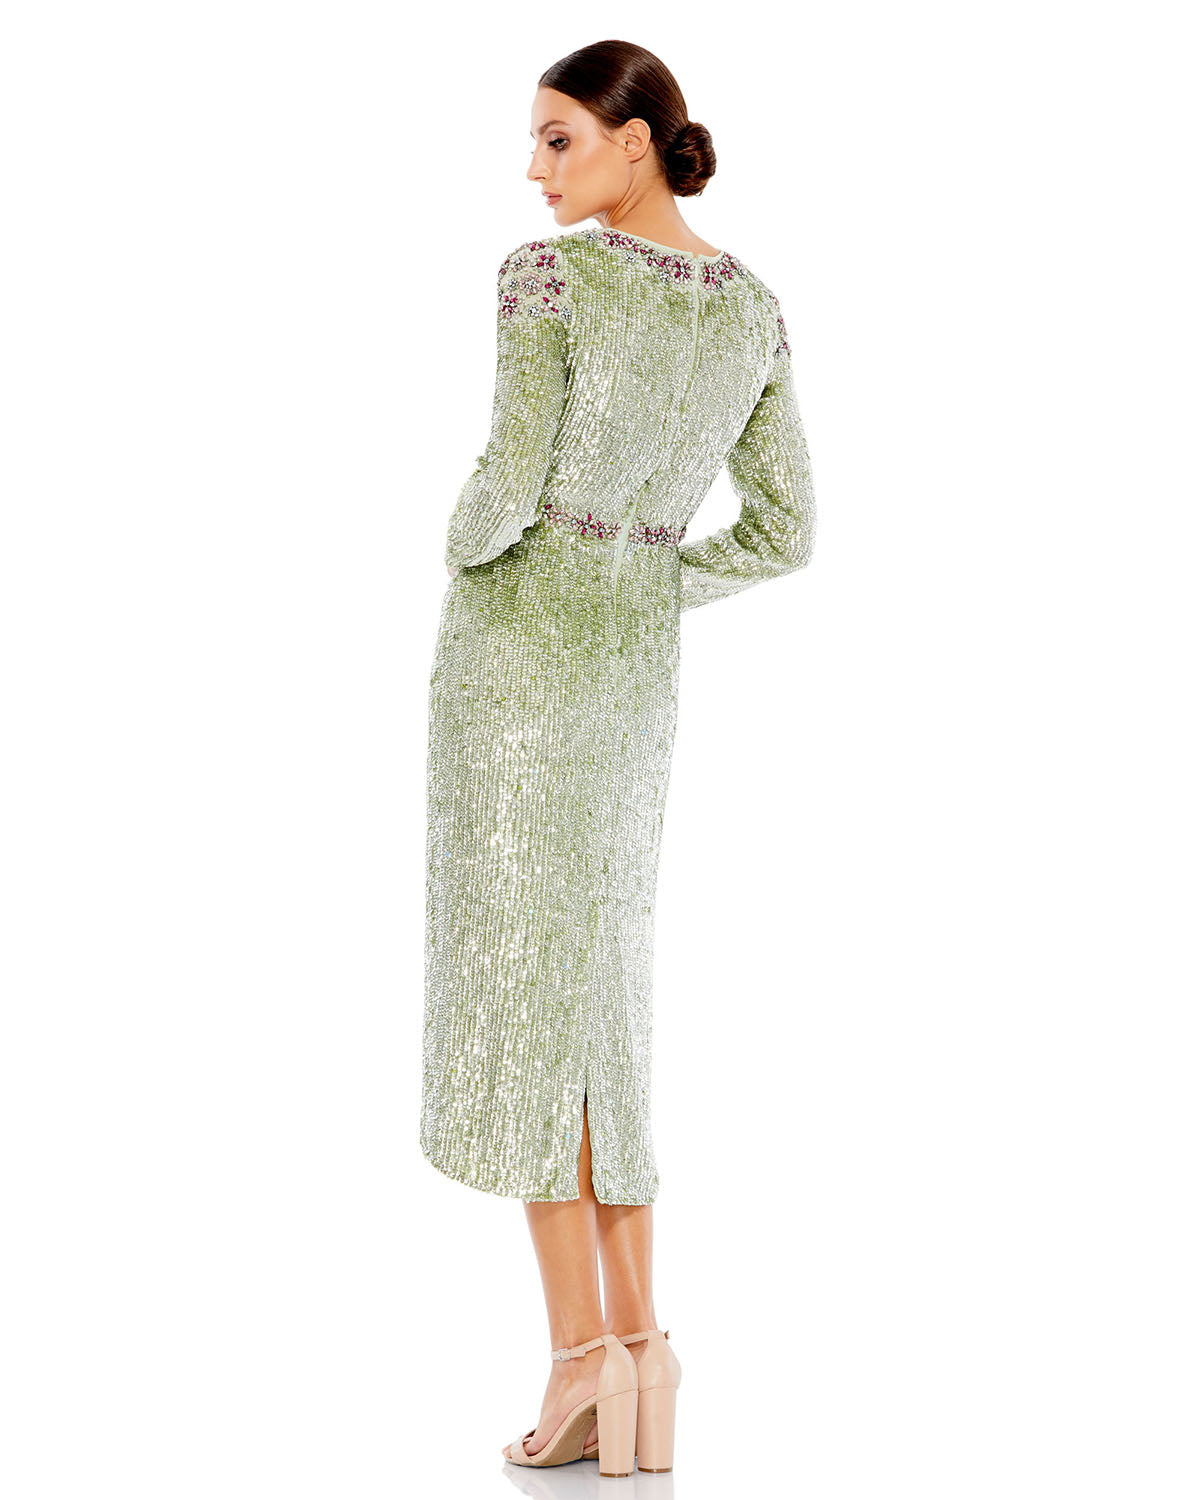 Floral Beaded Tea-Length Dress - FINAL SALE